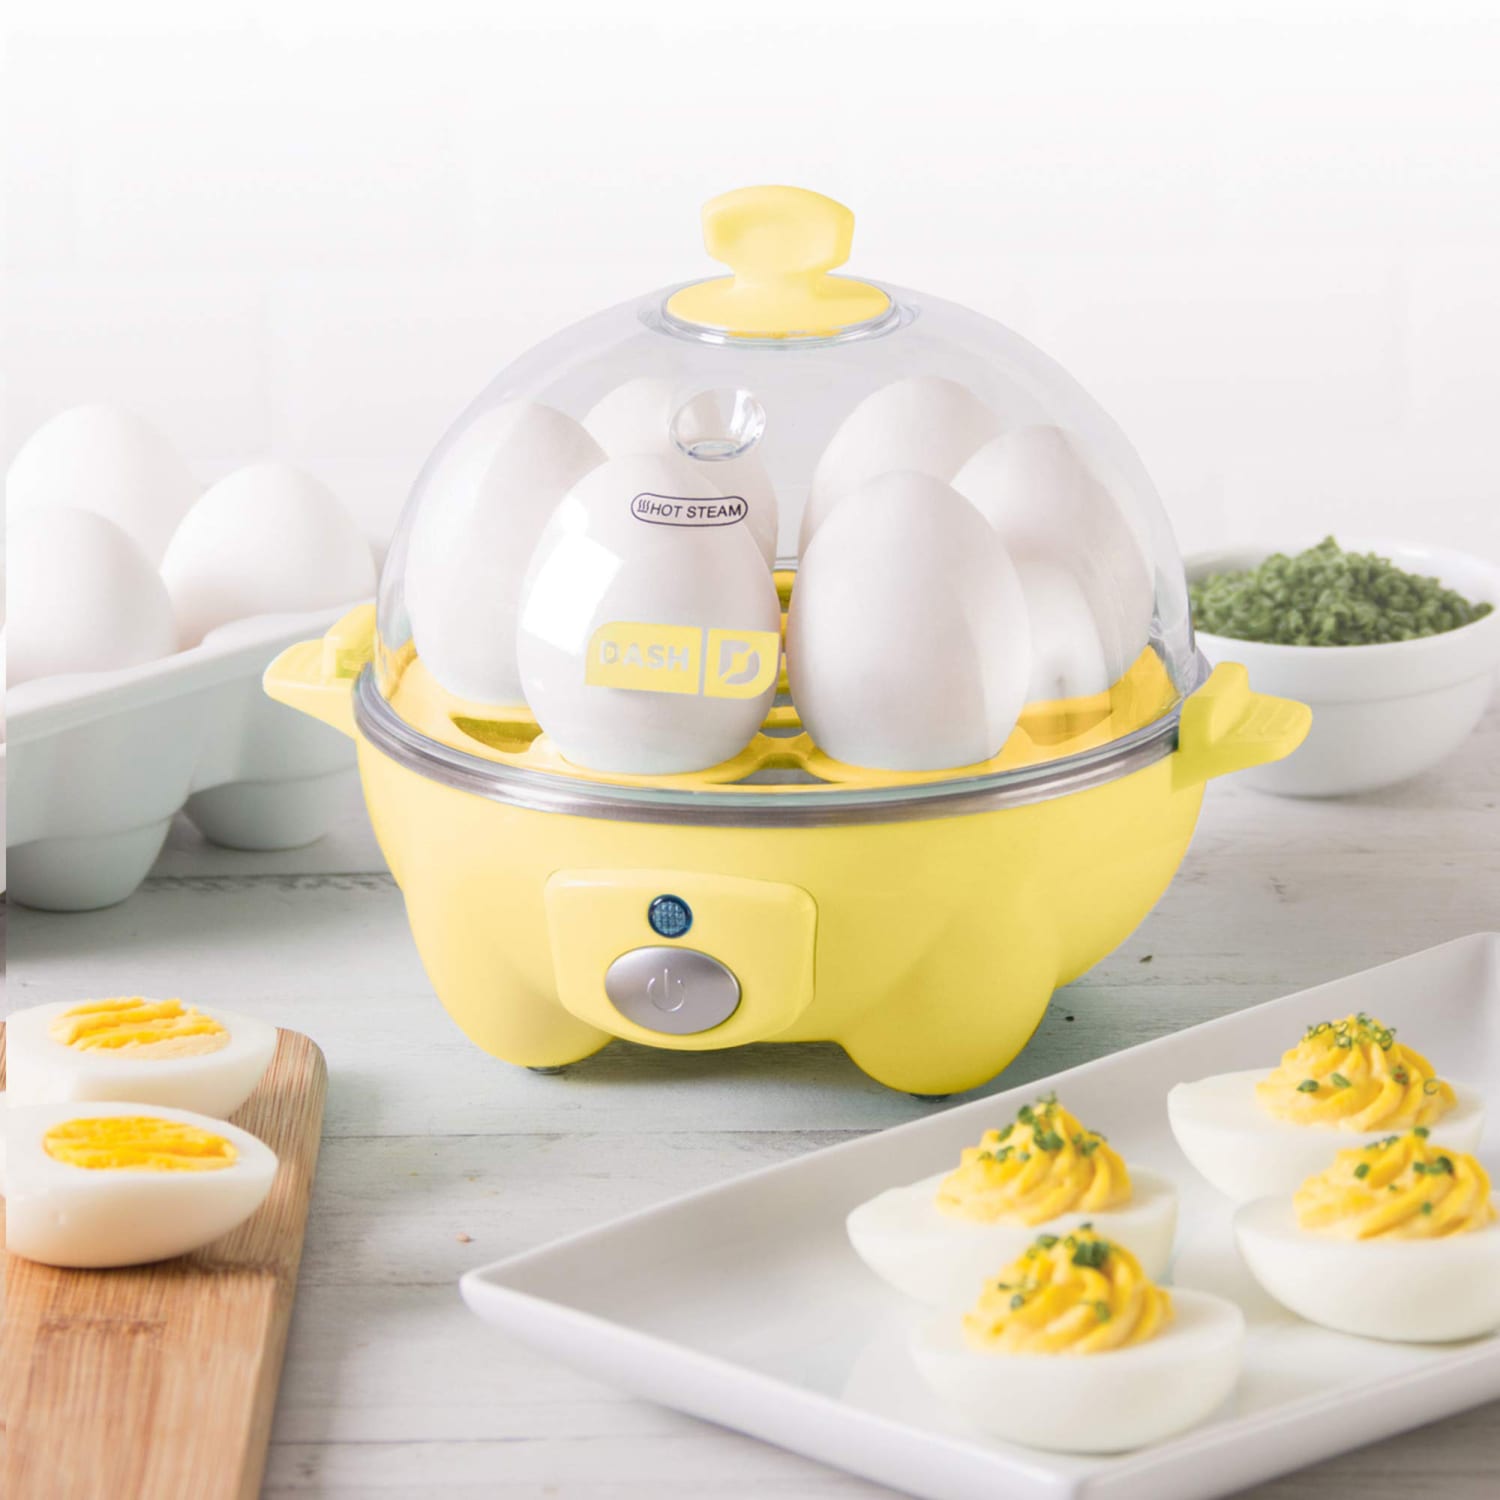 Does the Dash Egg Cooker Make Hard-Boiled Eggs? 